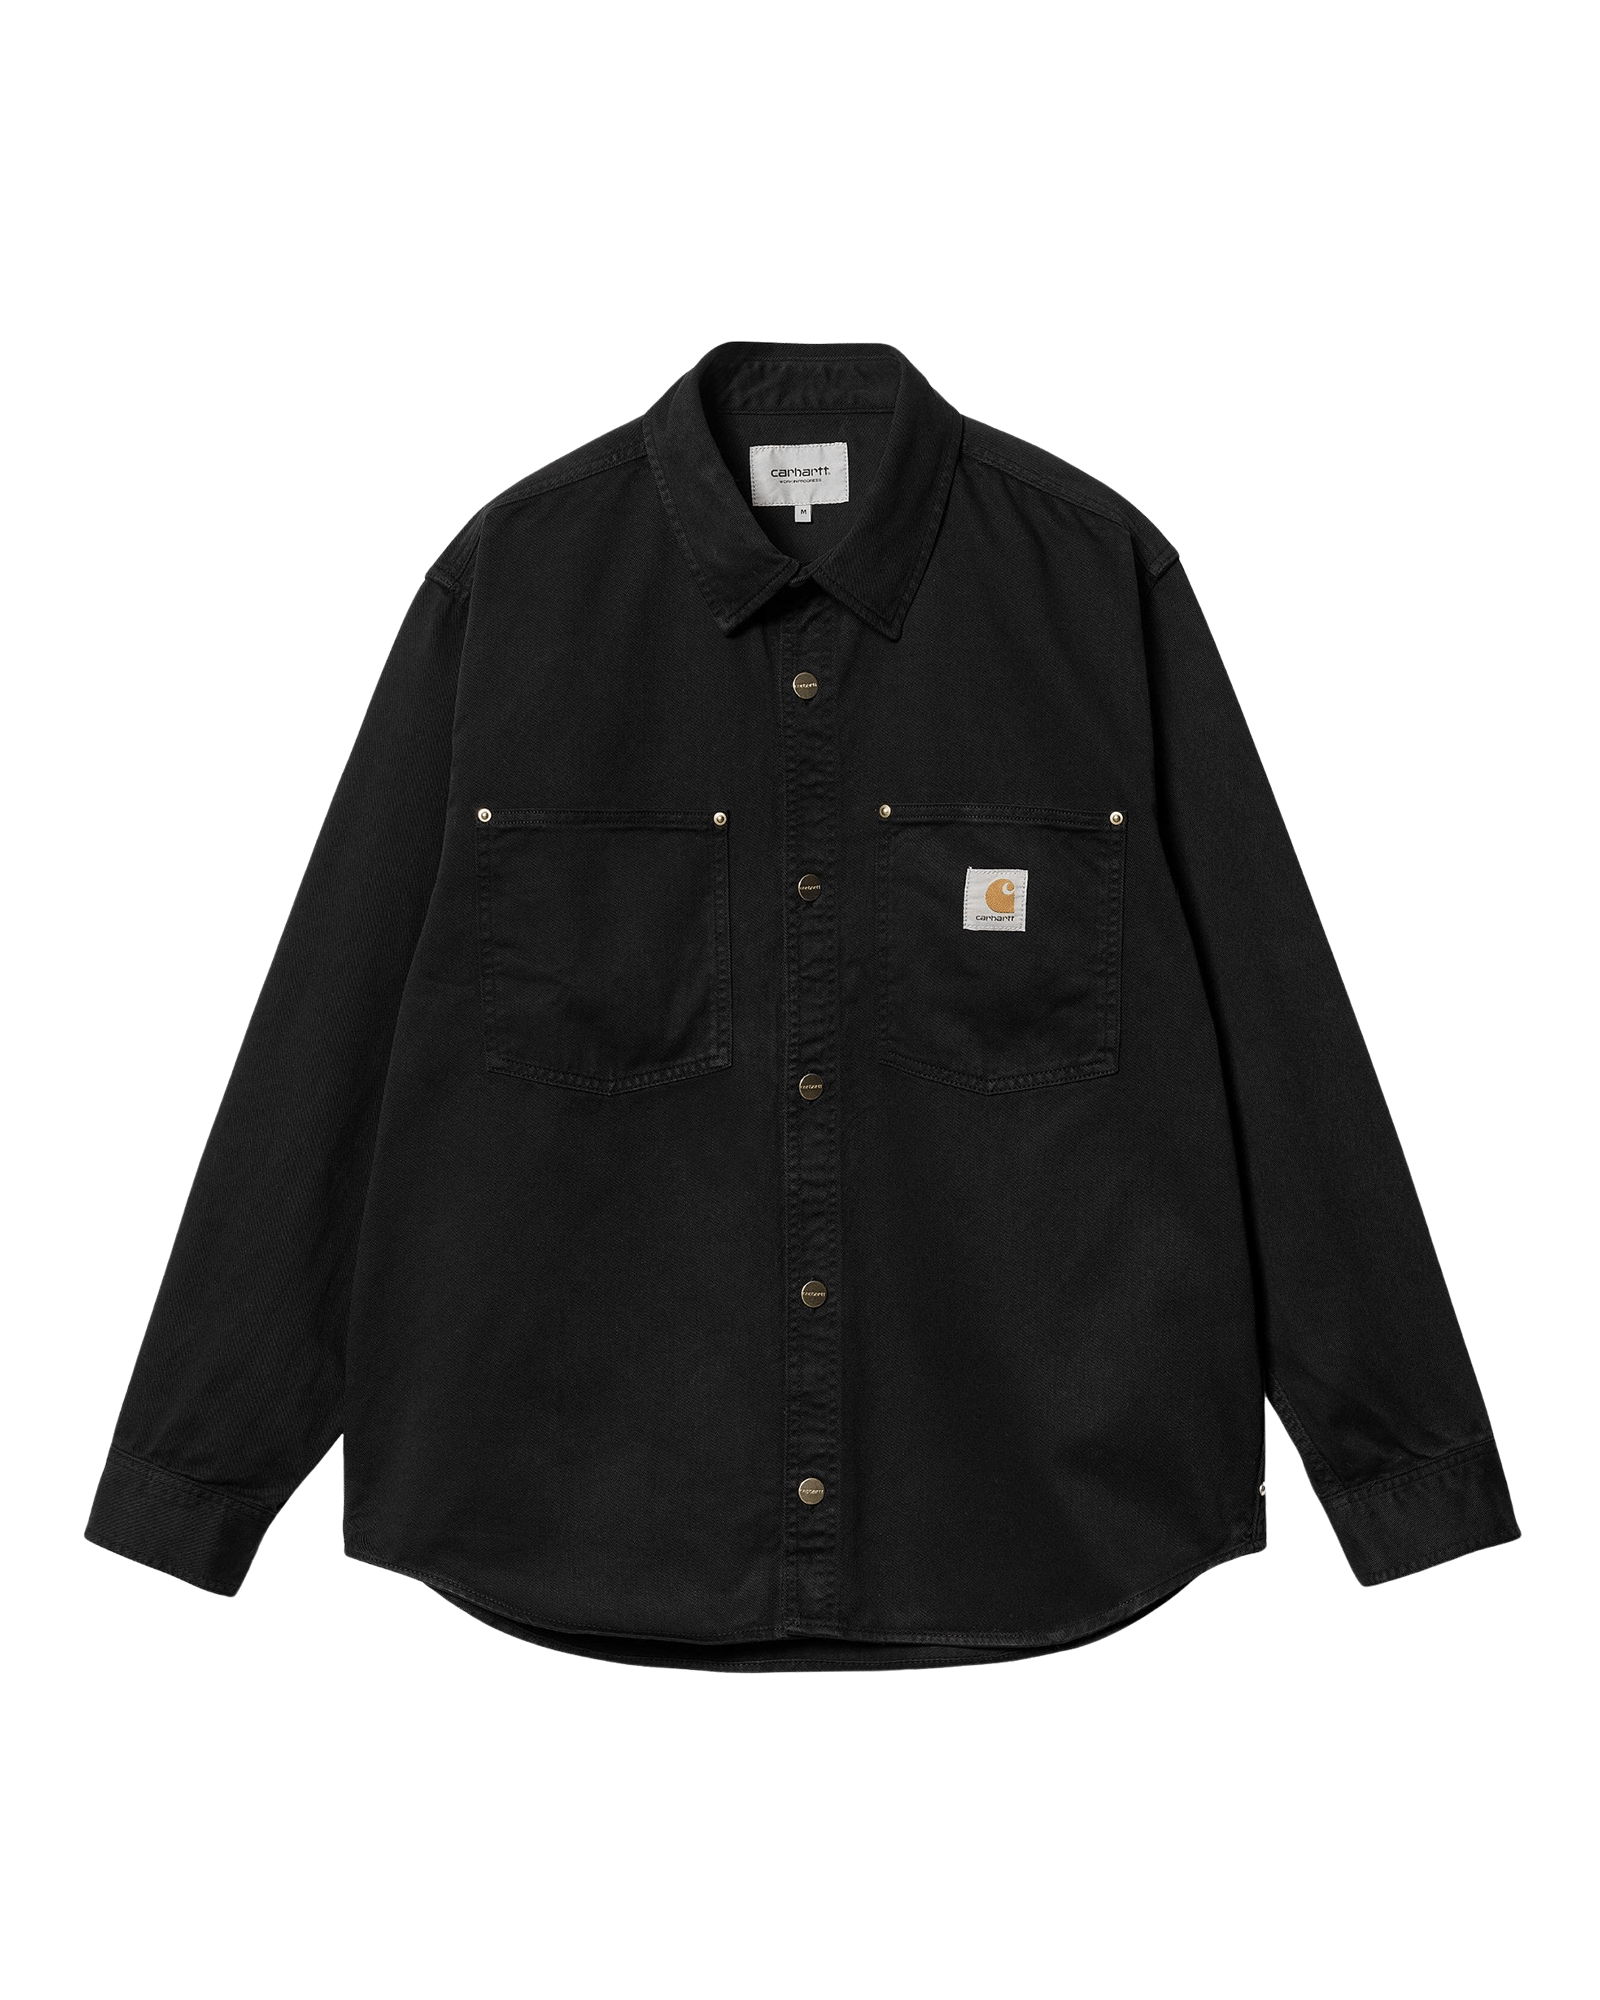 Derby Shirt Jacket $169 Carhartt WIP Outerwear Jackets Black